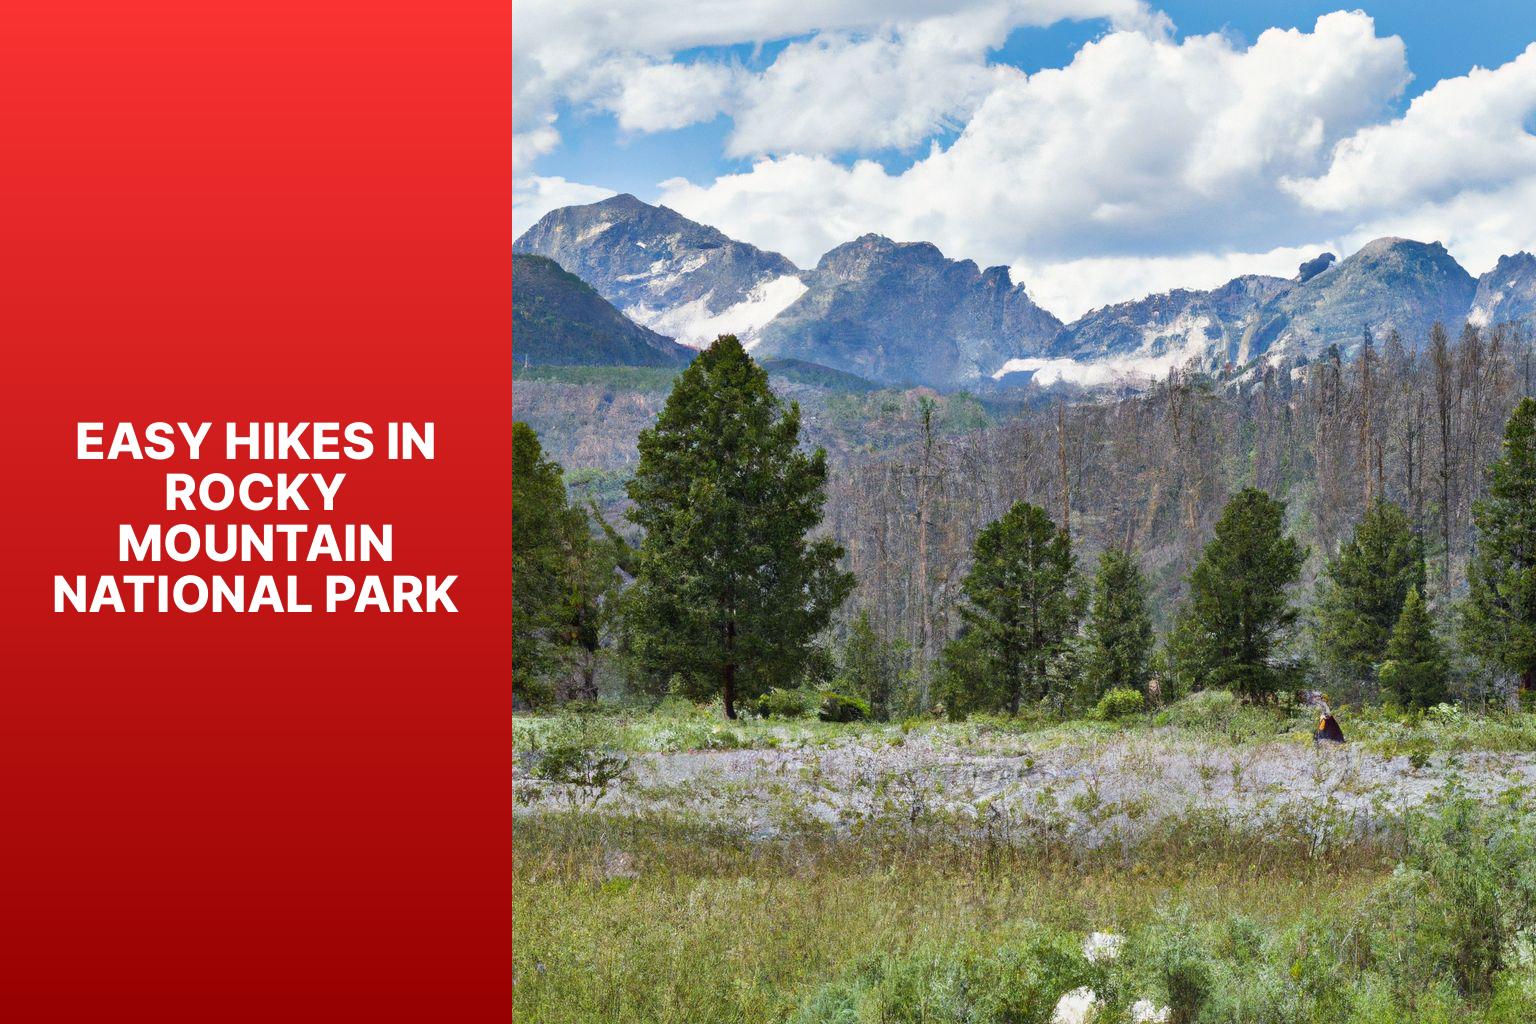 Easy Hikes in Rocky Mountain National Park - jasonexplorer.com